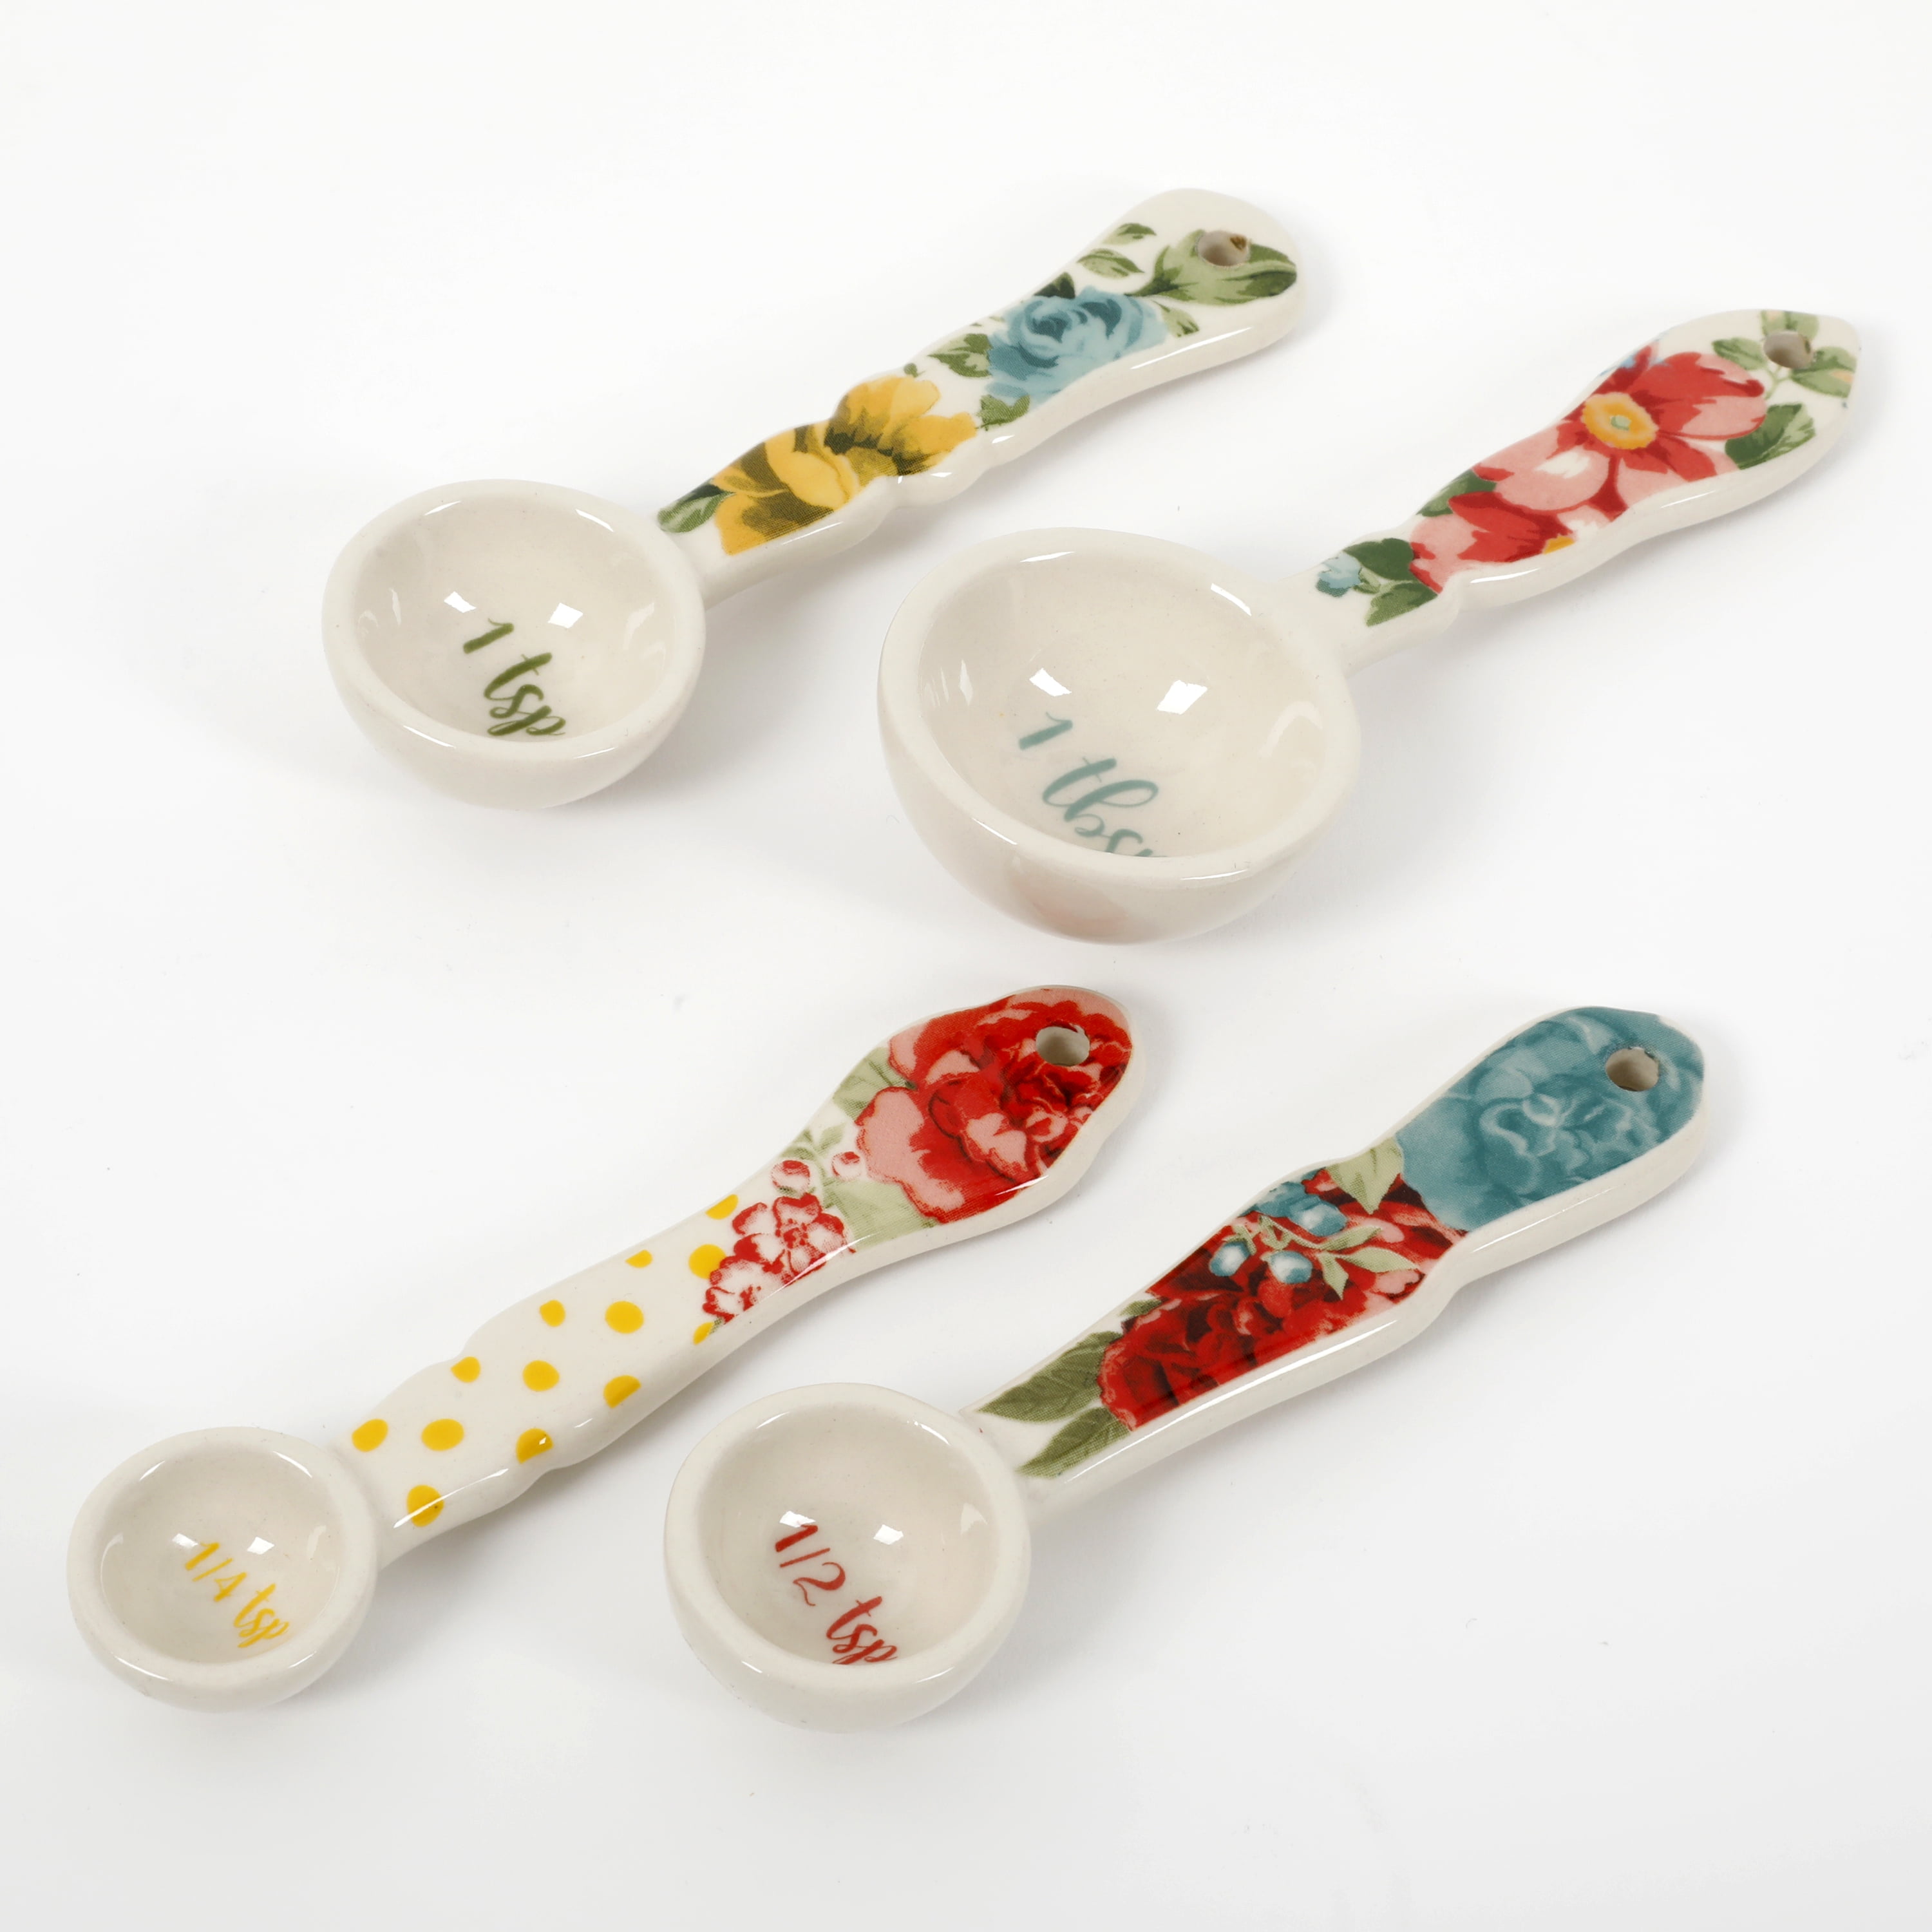 The Pioneer Woman Vintage Floral Ceramic Measuring Spoons, 4 Piece